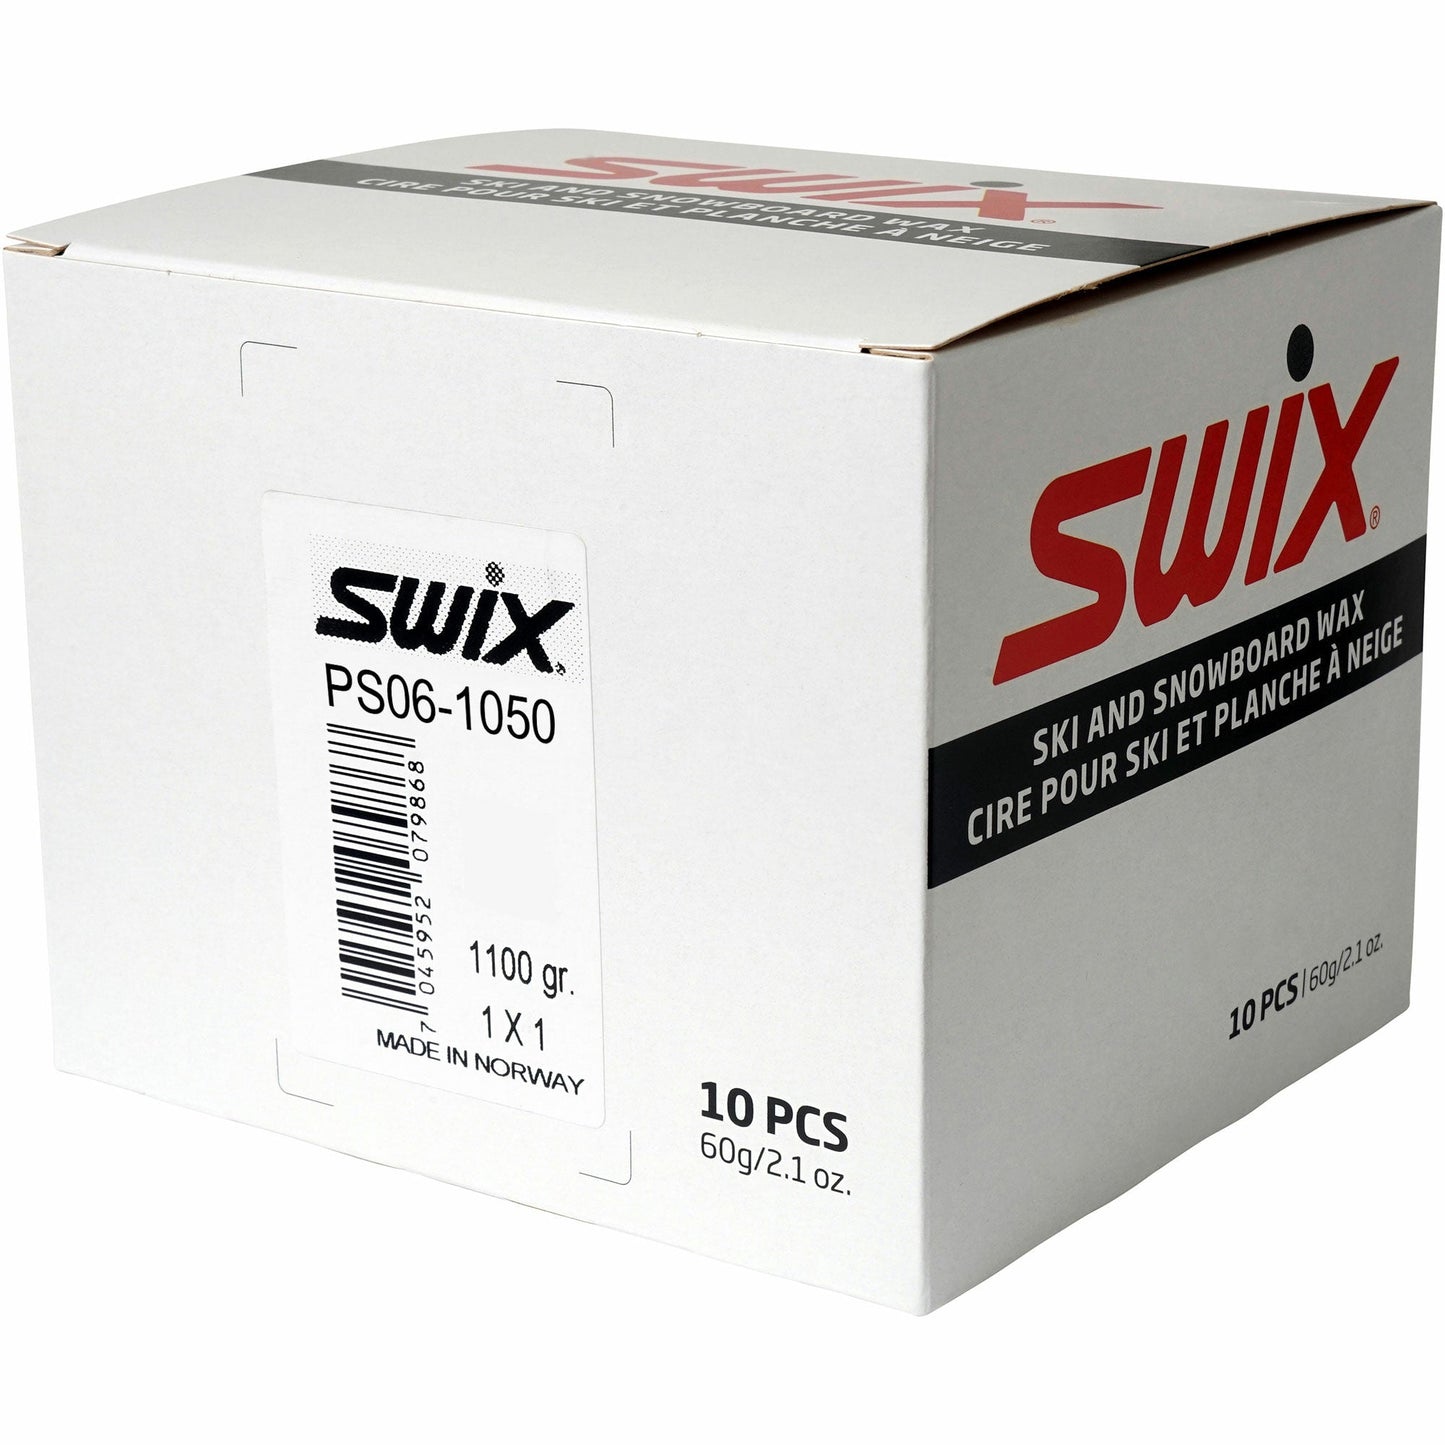 SWIX PS6 Blocks for T60 Wax Machine, -6°C/-12°C